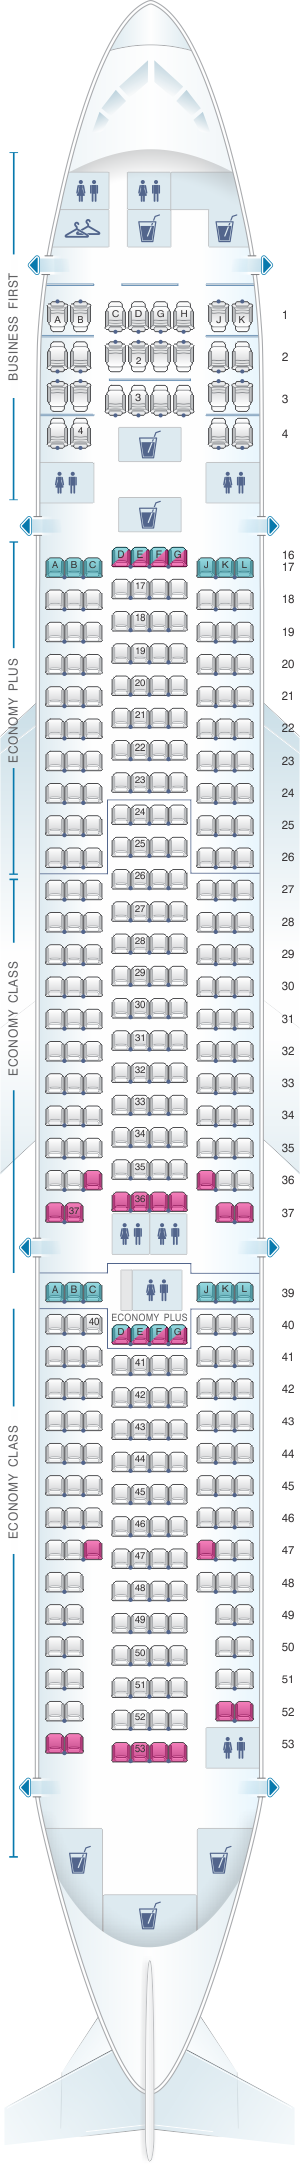 United 777 200 Seat Map